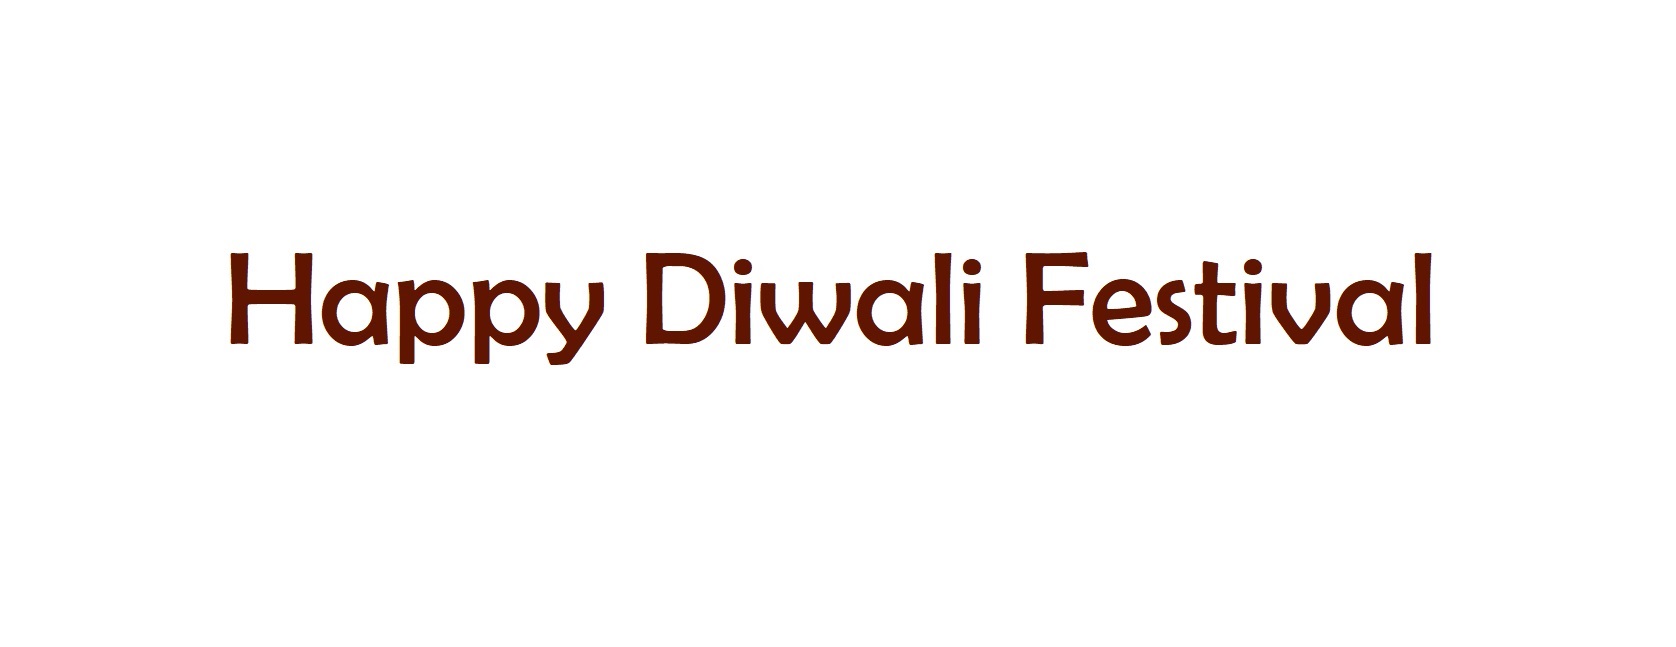 Diwali Festival Tour